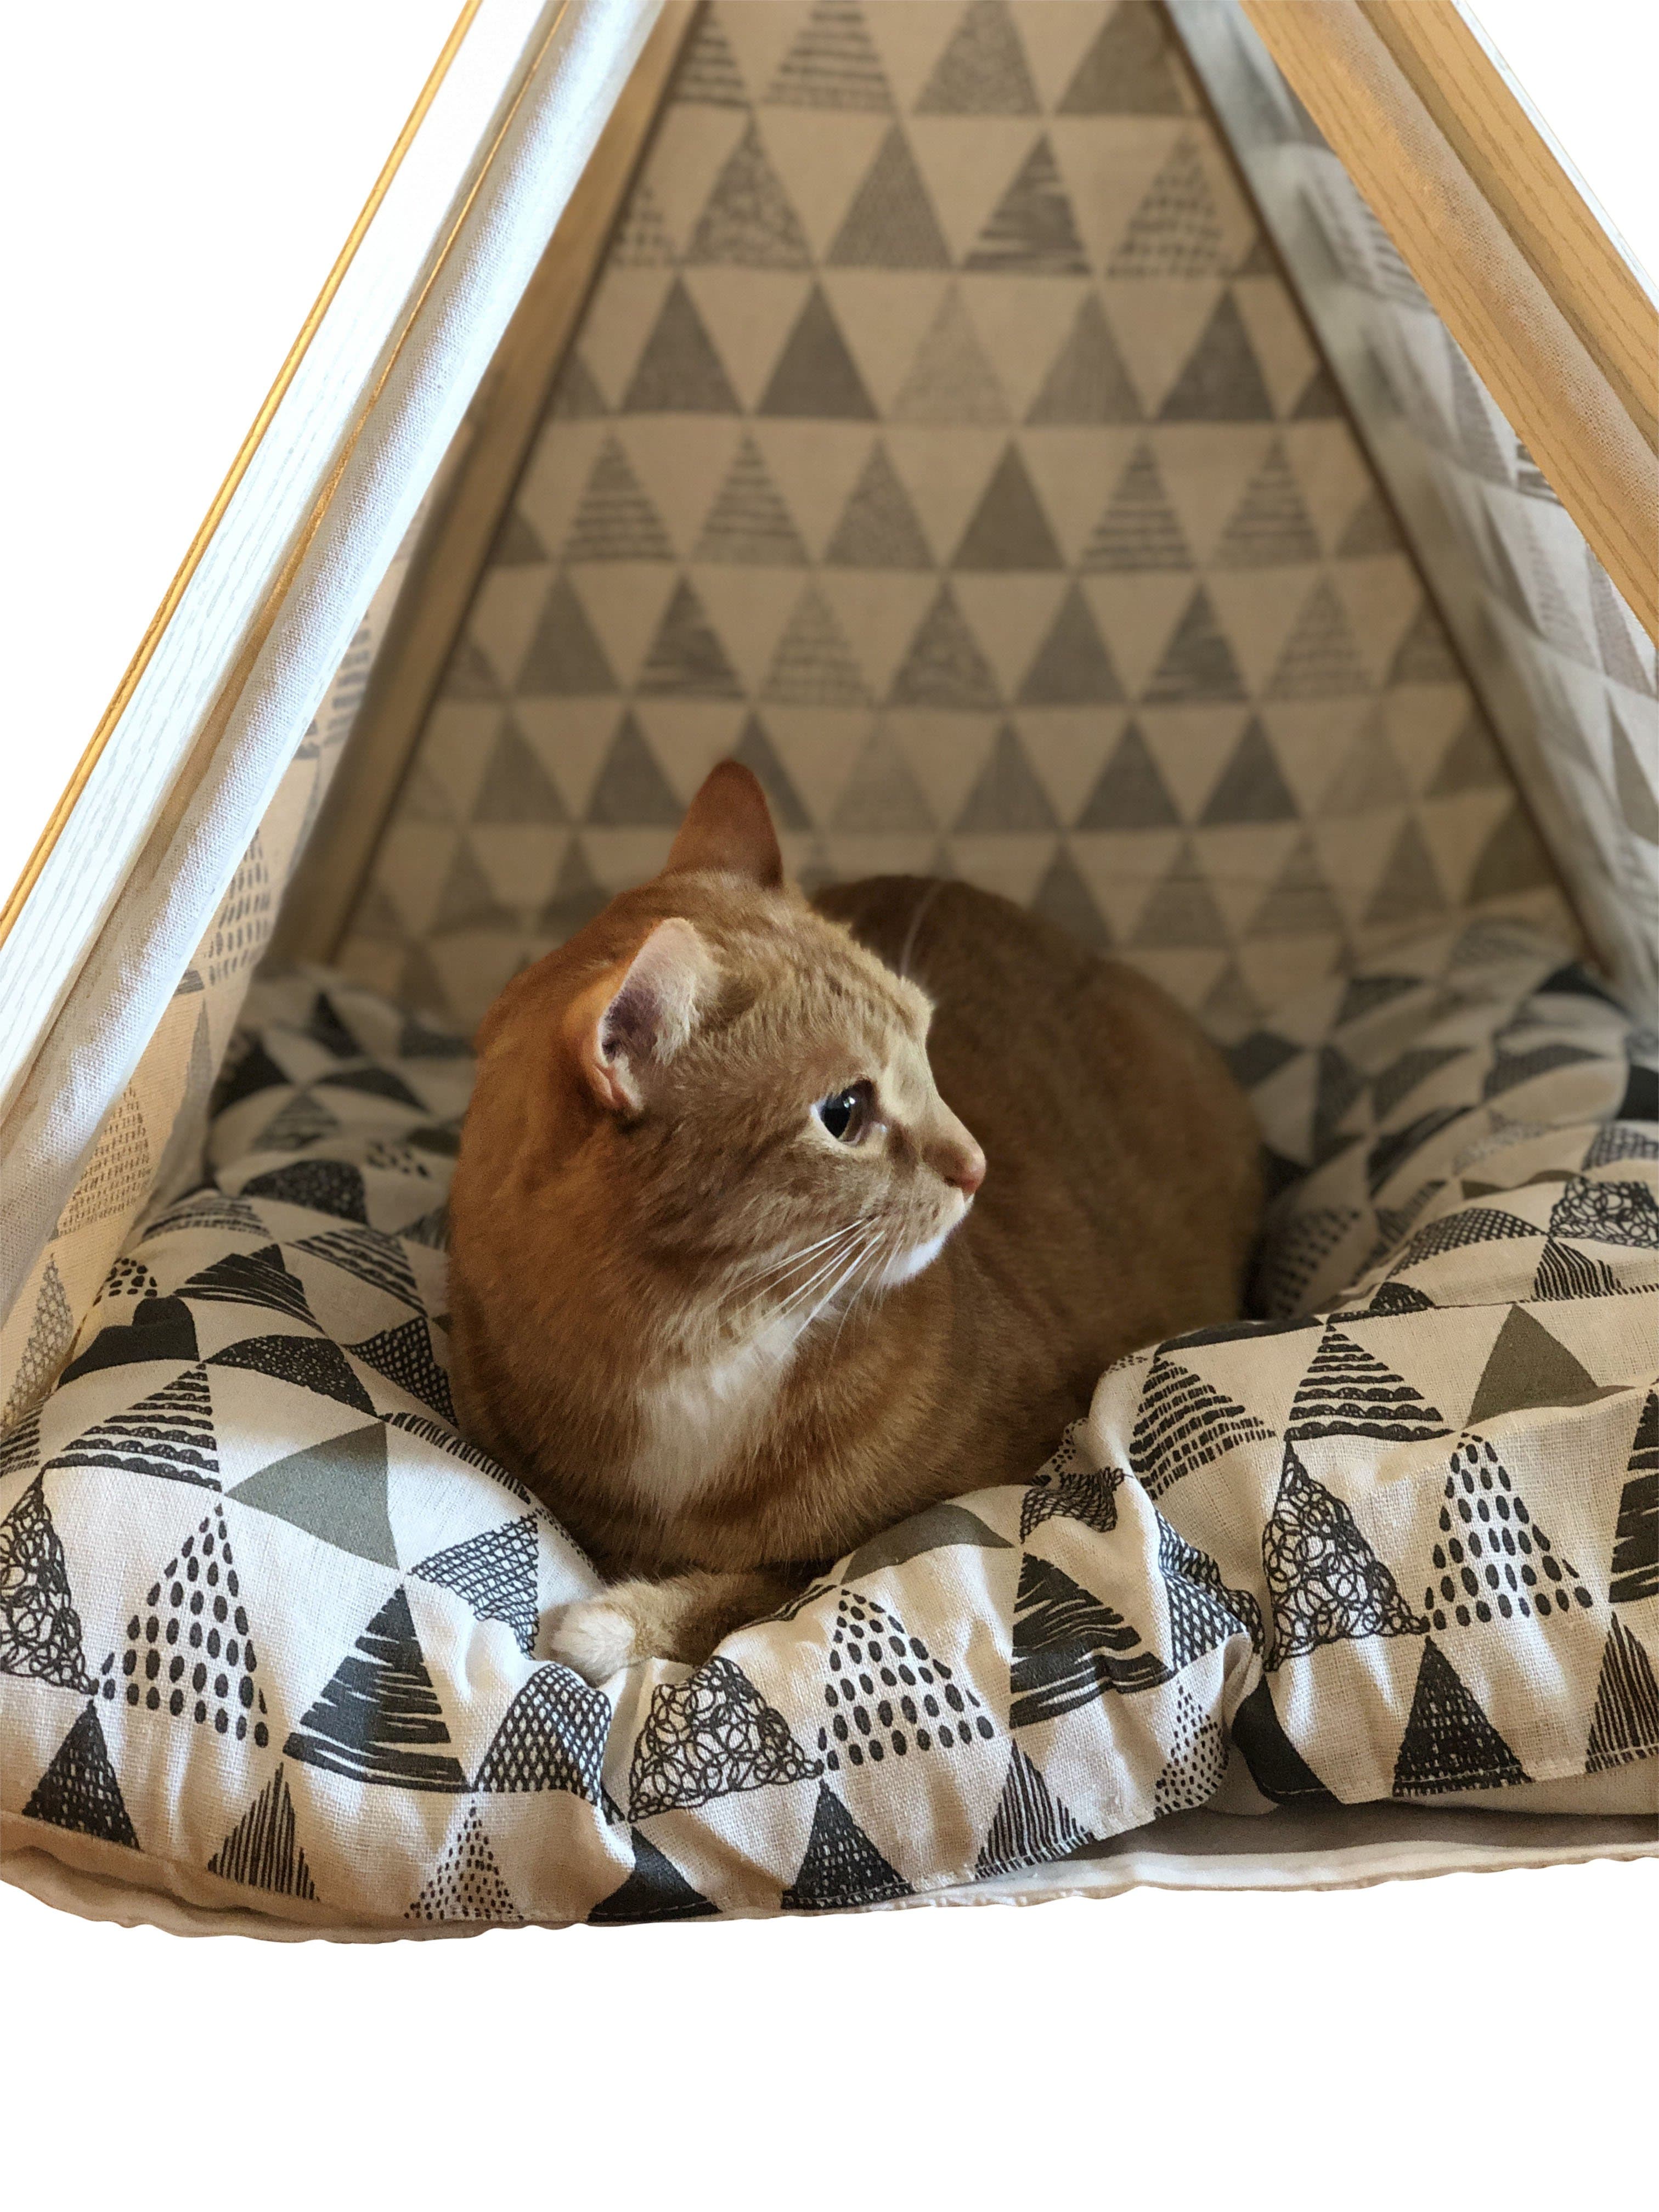 "The Glamper" Grey Cat Yurt